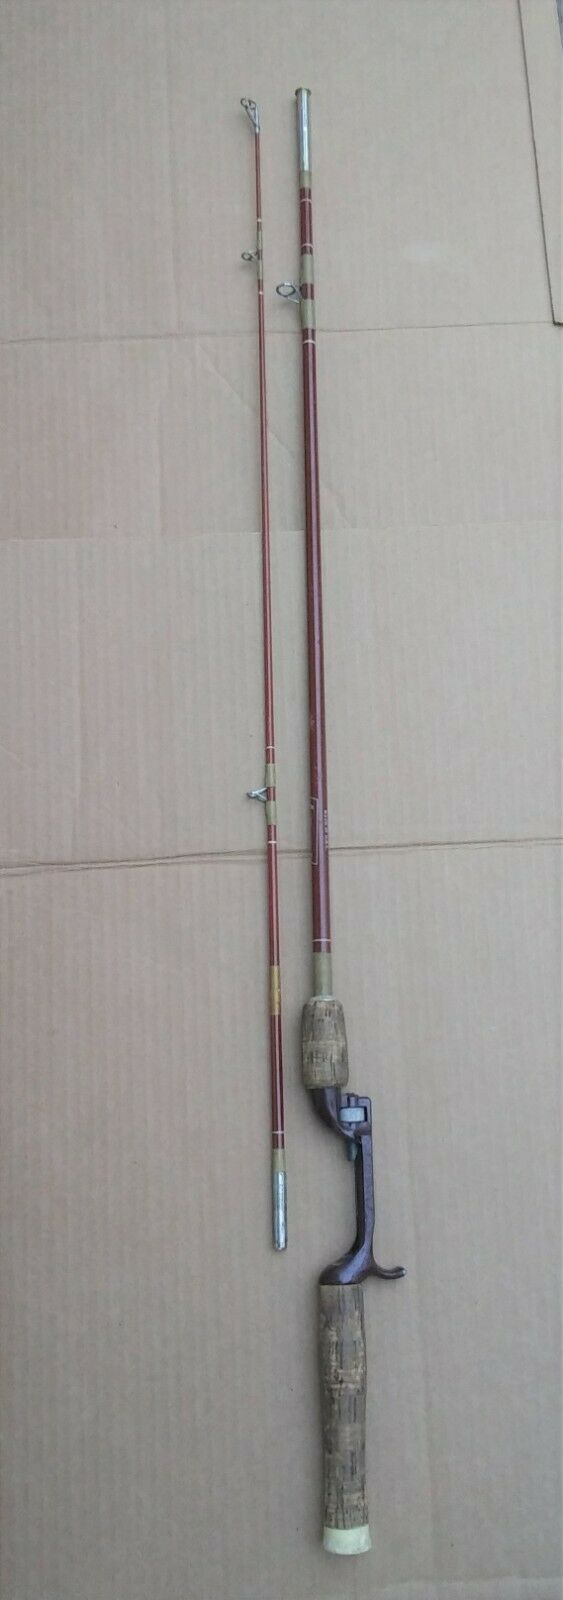 Action-rod Orchard Industries? Vintage Fishing Rod 67"( Please Read Description)